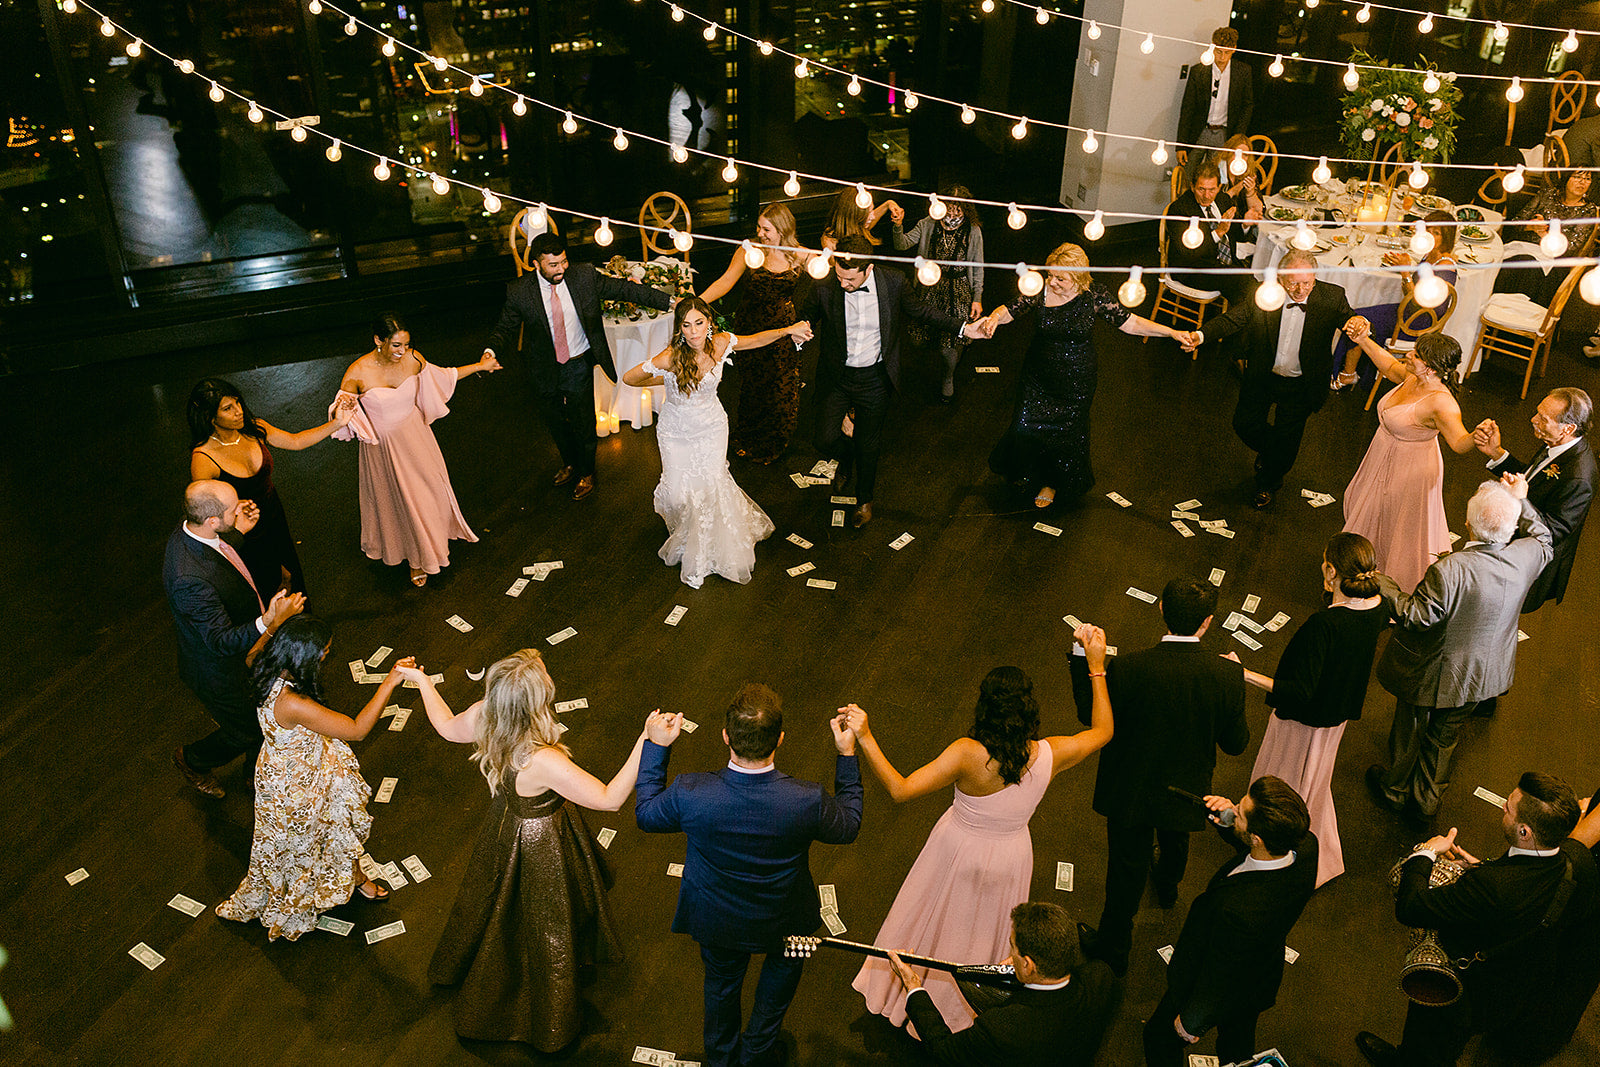 sirtaki greek traditional dance performed in dance floor at wedding reception in boston